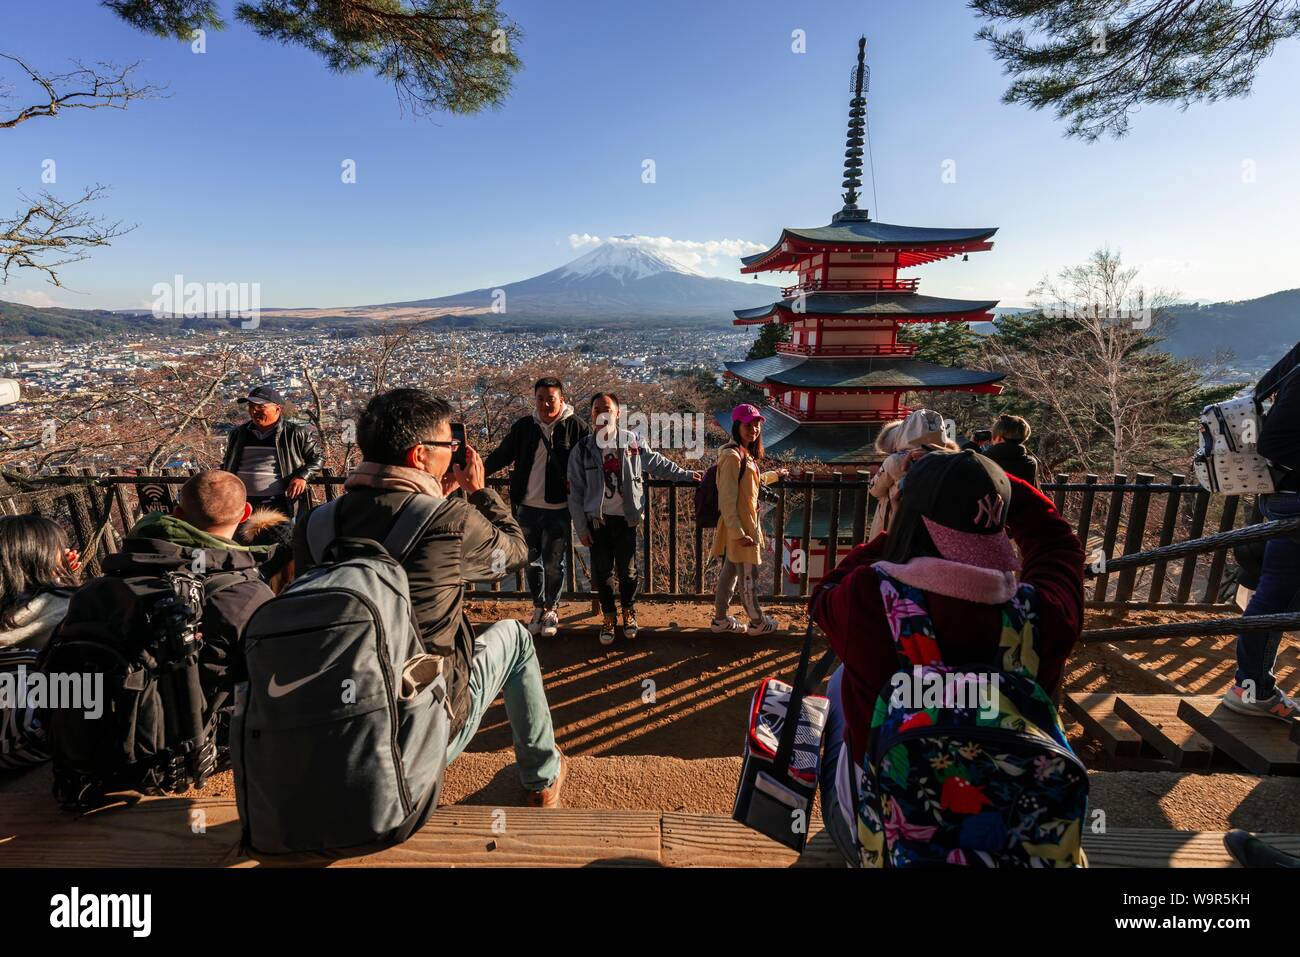 Tourists at a viewpoint, view of five-storey pagoda, Chureito pagoda with Fujiyoshida City and Mount Fuji volcano, Yamanashi Prefecture, Japan Stock Photo